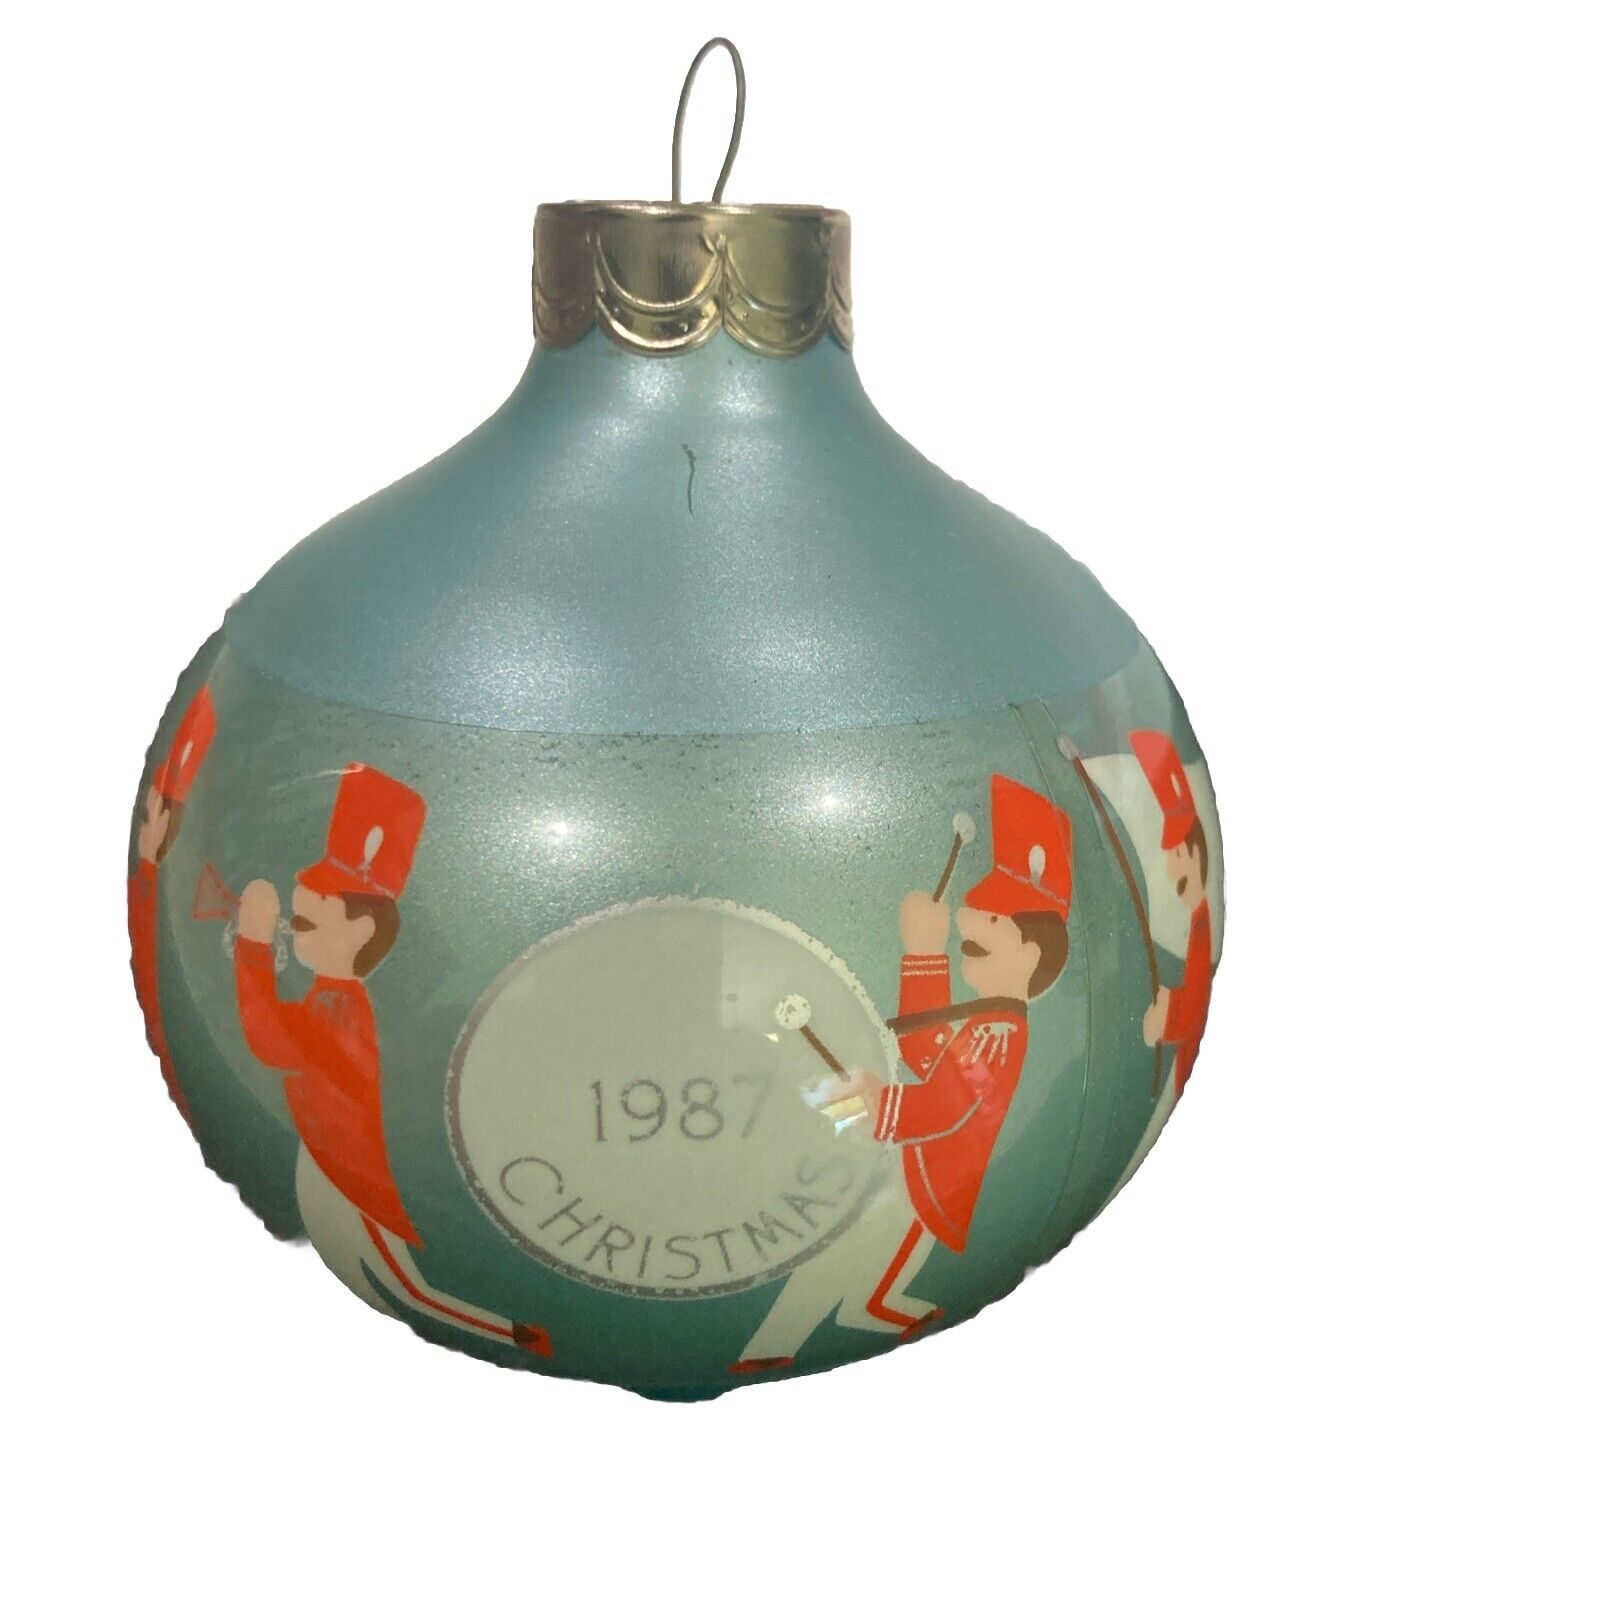 Hallmark 1987 Keepsake Glass Ball Christmas Ornament - Grandson Toy Soldiers